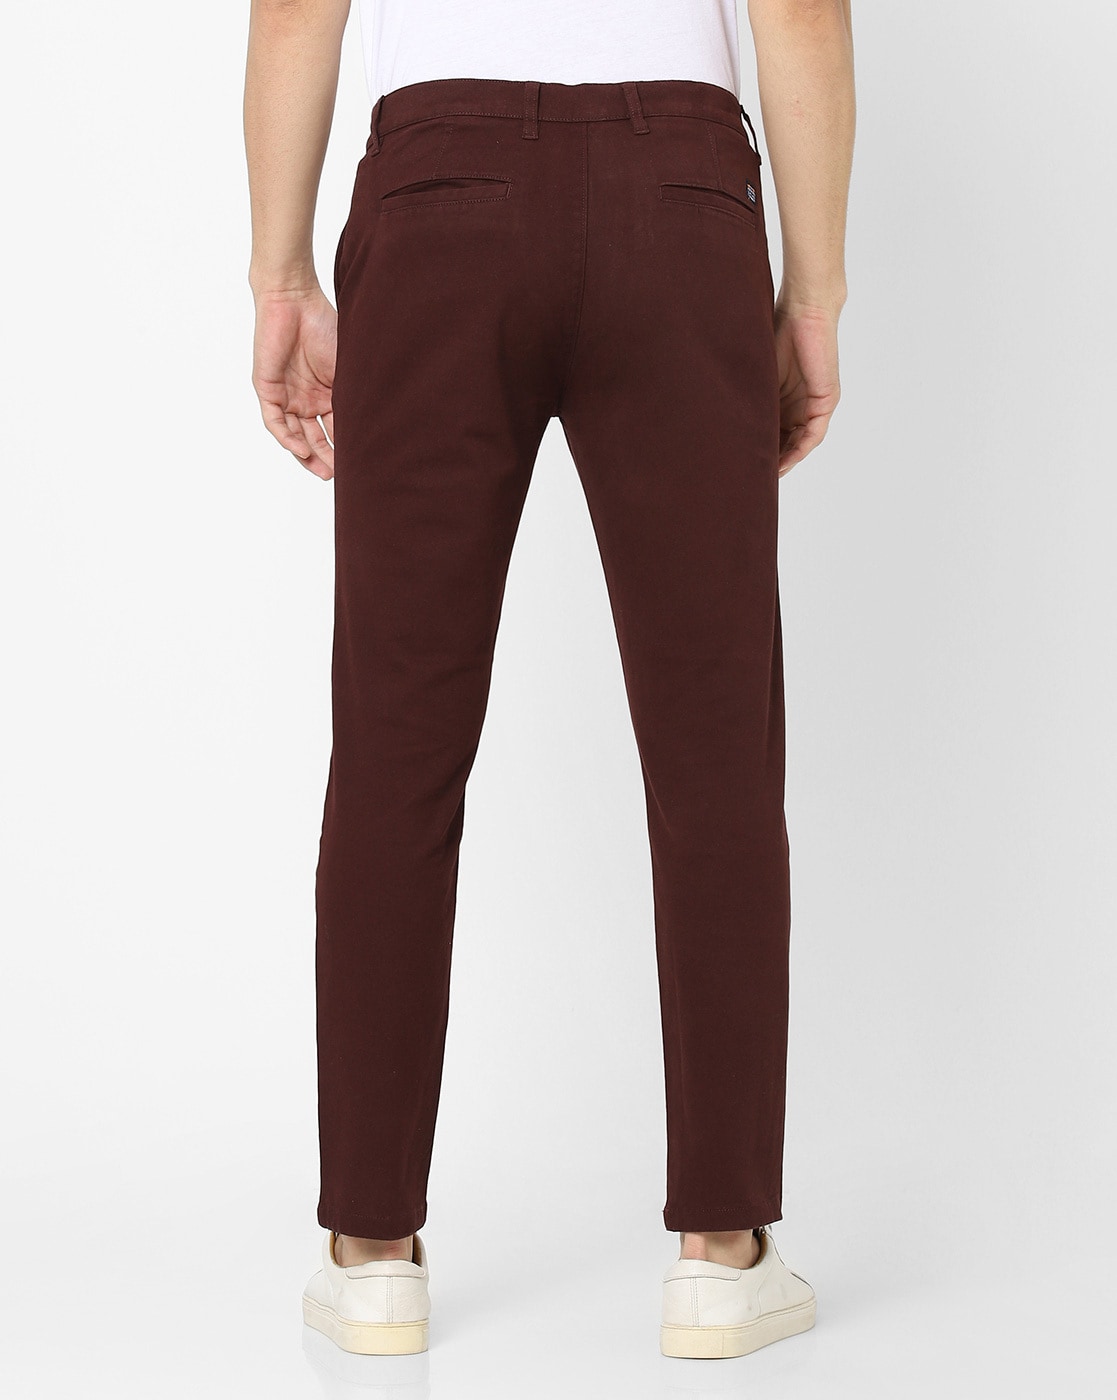 Jack  Jones Premium slim fit sateen suit trousers in burgundy  ASOS